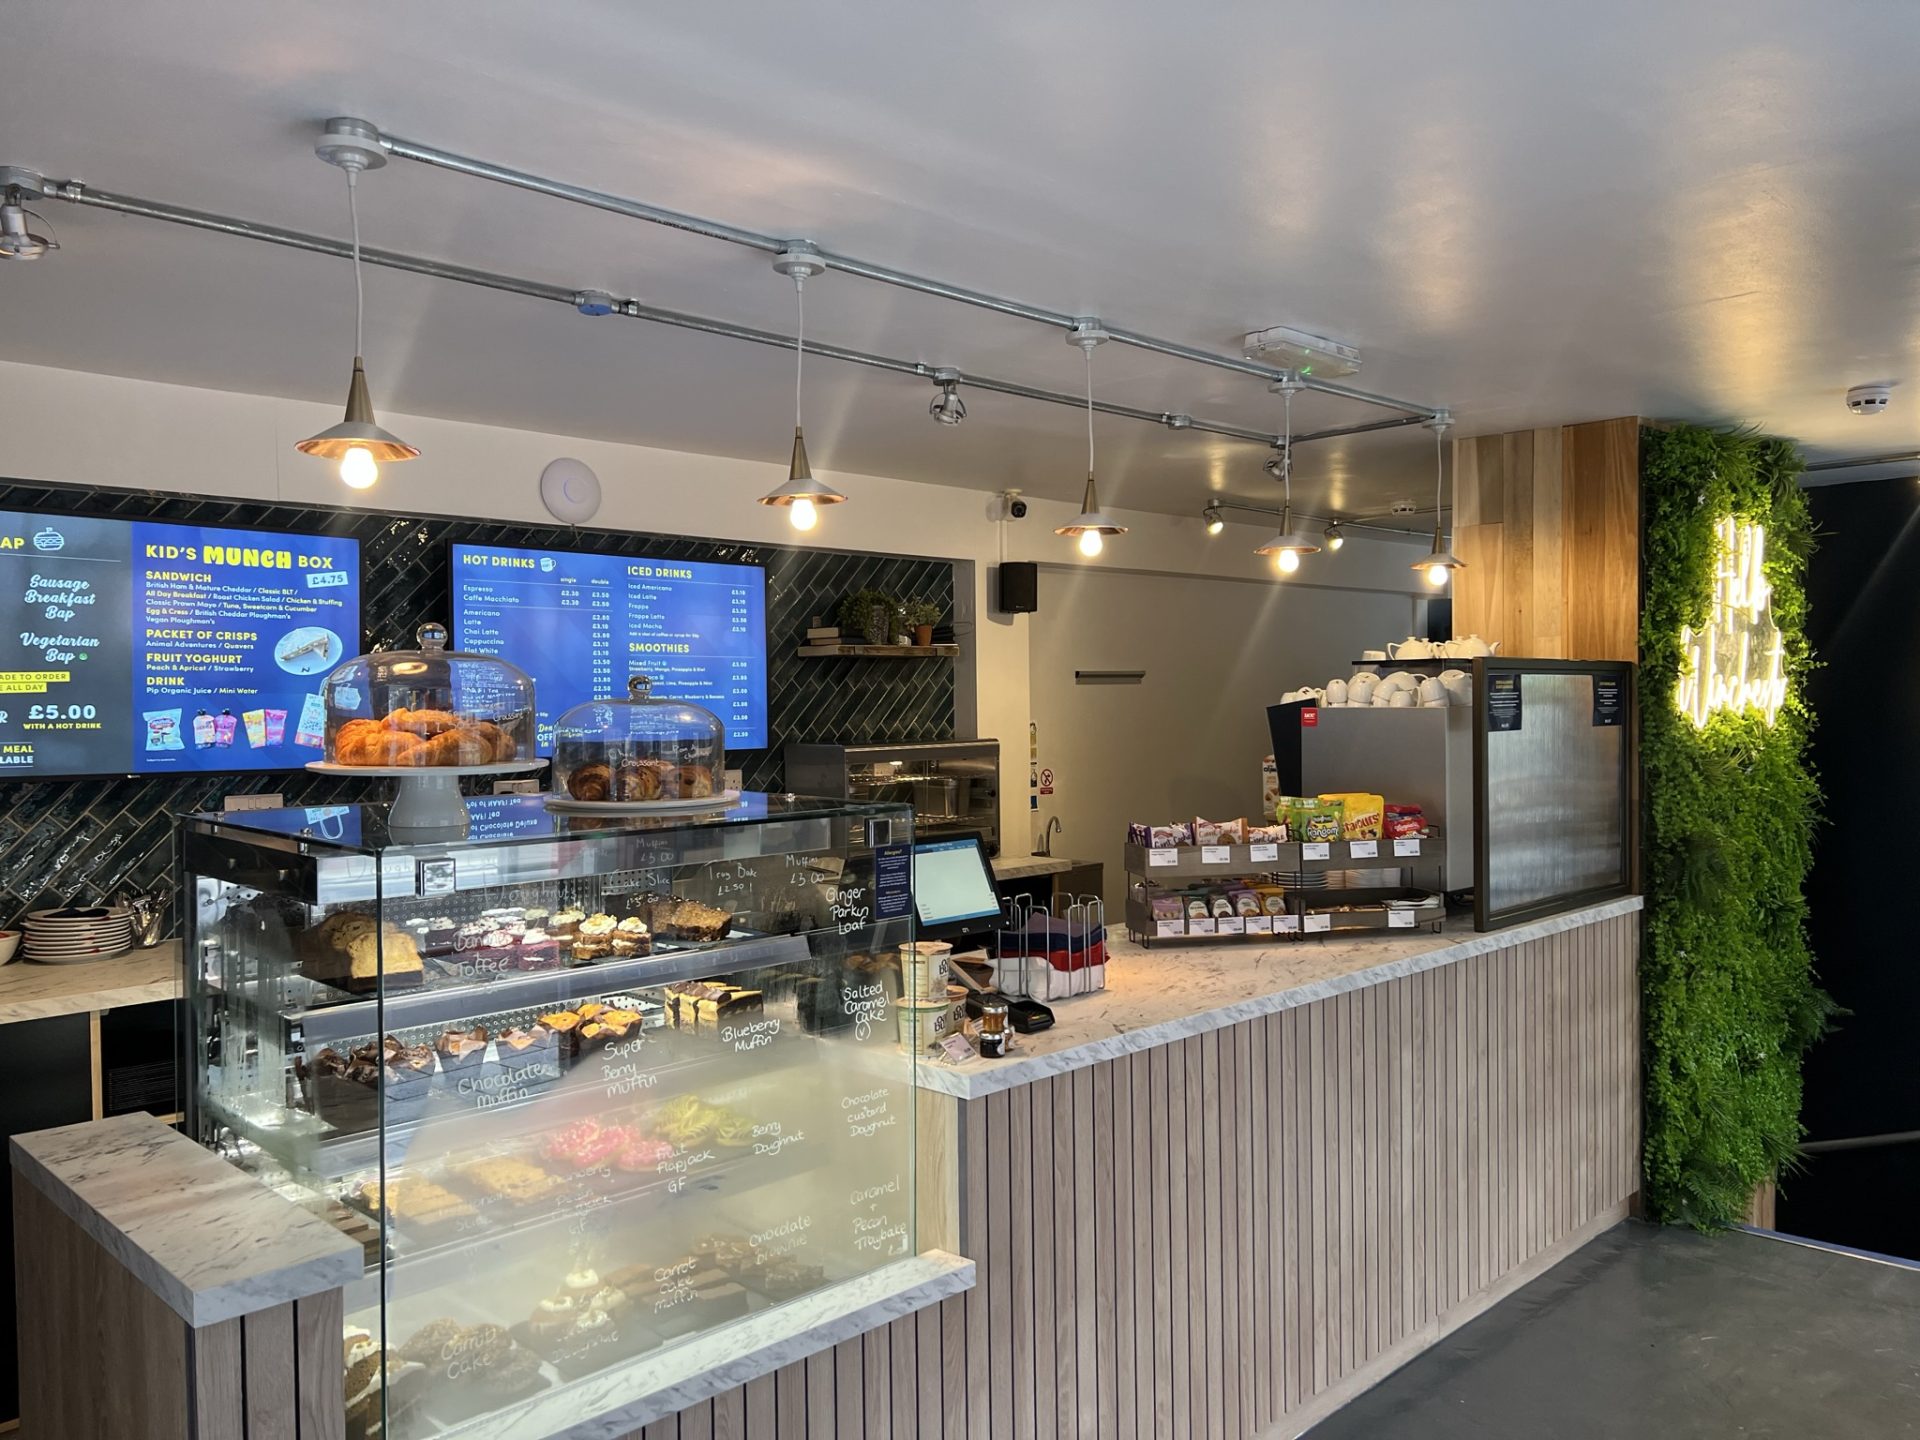 New NAAFI Cafes re-open following refurbishments